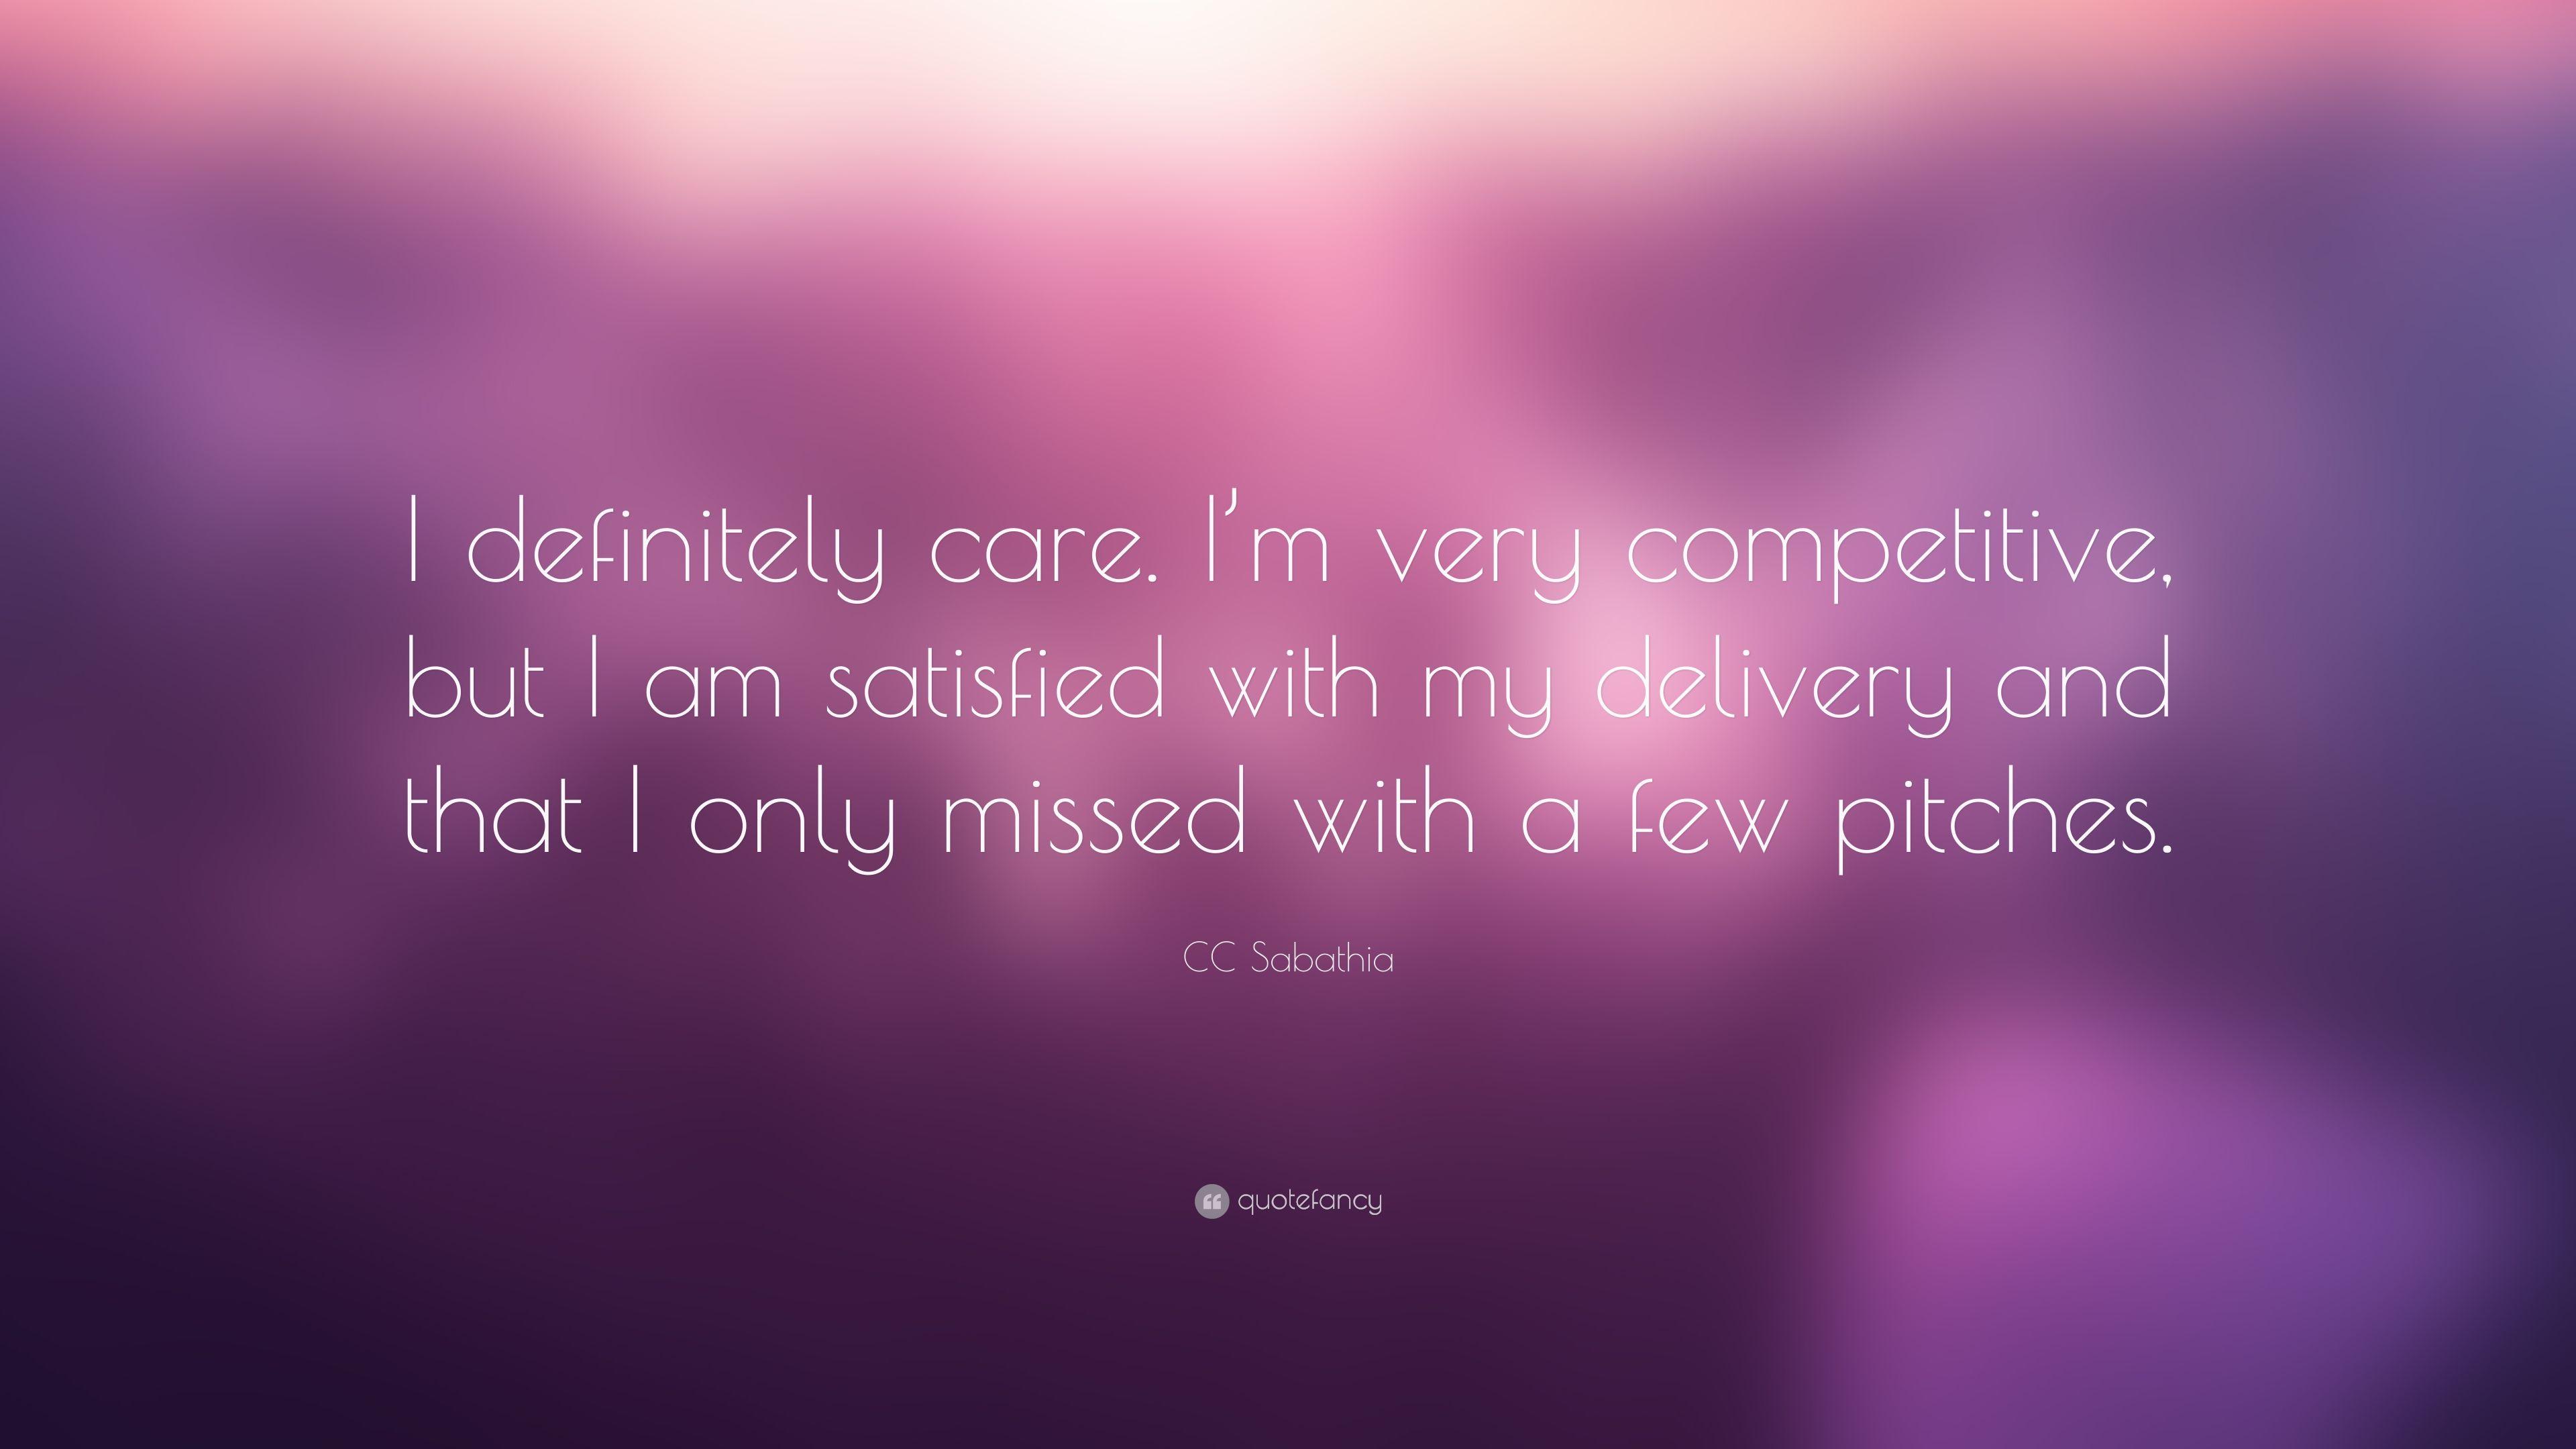 CC Sabathia Quote: “I definitely care. I'm very competitive, but I